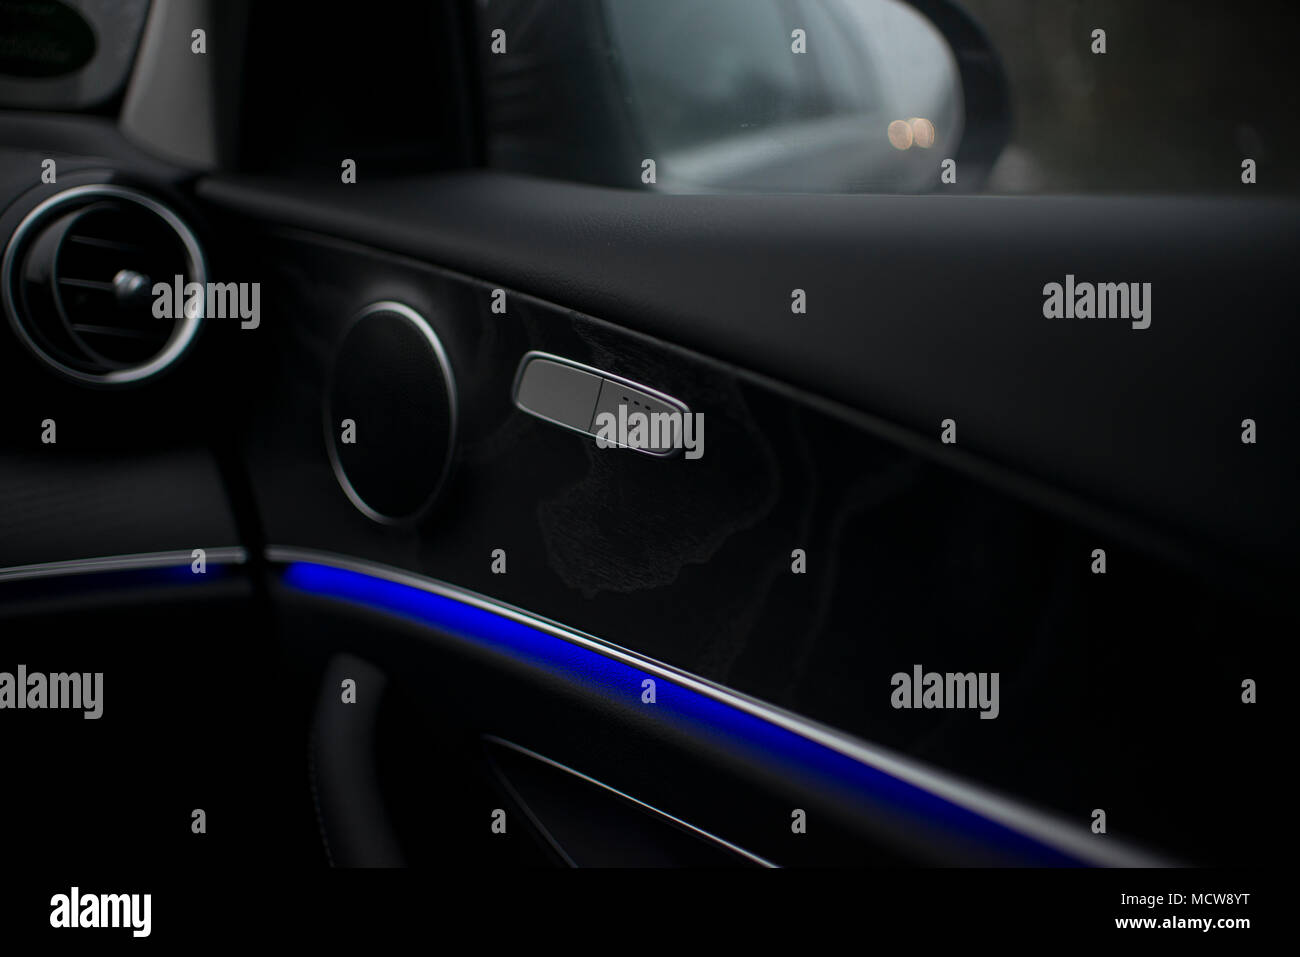 Luxus Auto Innenraum mit Umgebungslicht Stockfotografie - Alamy